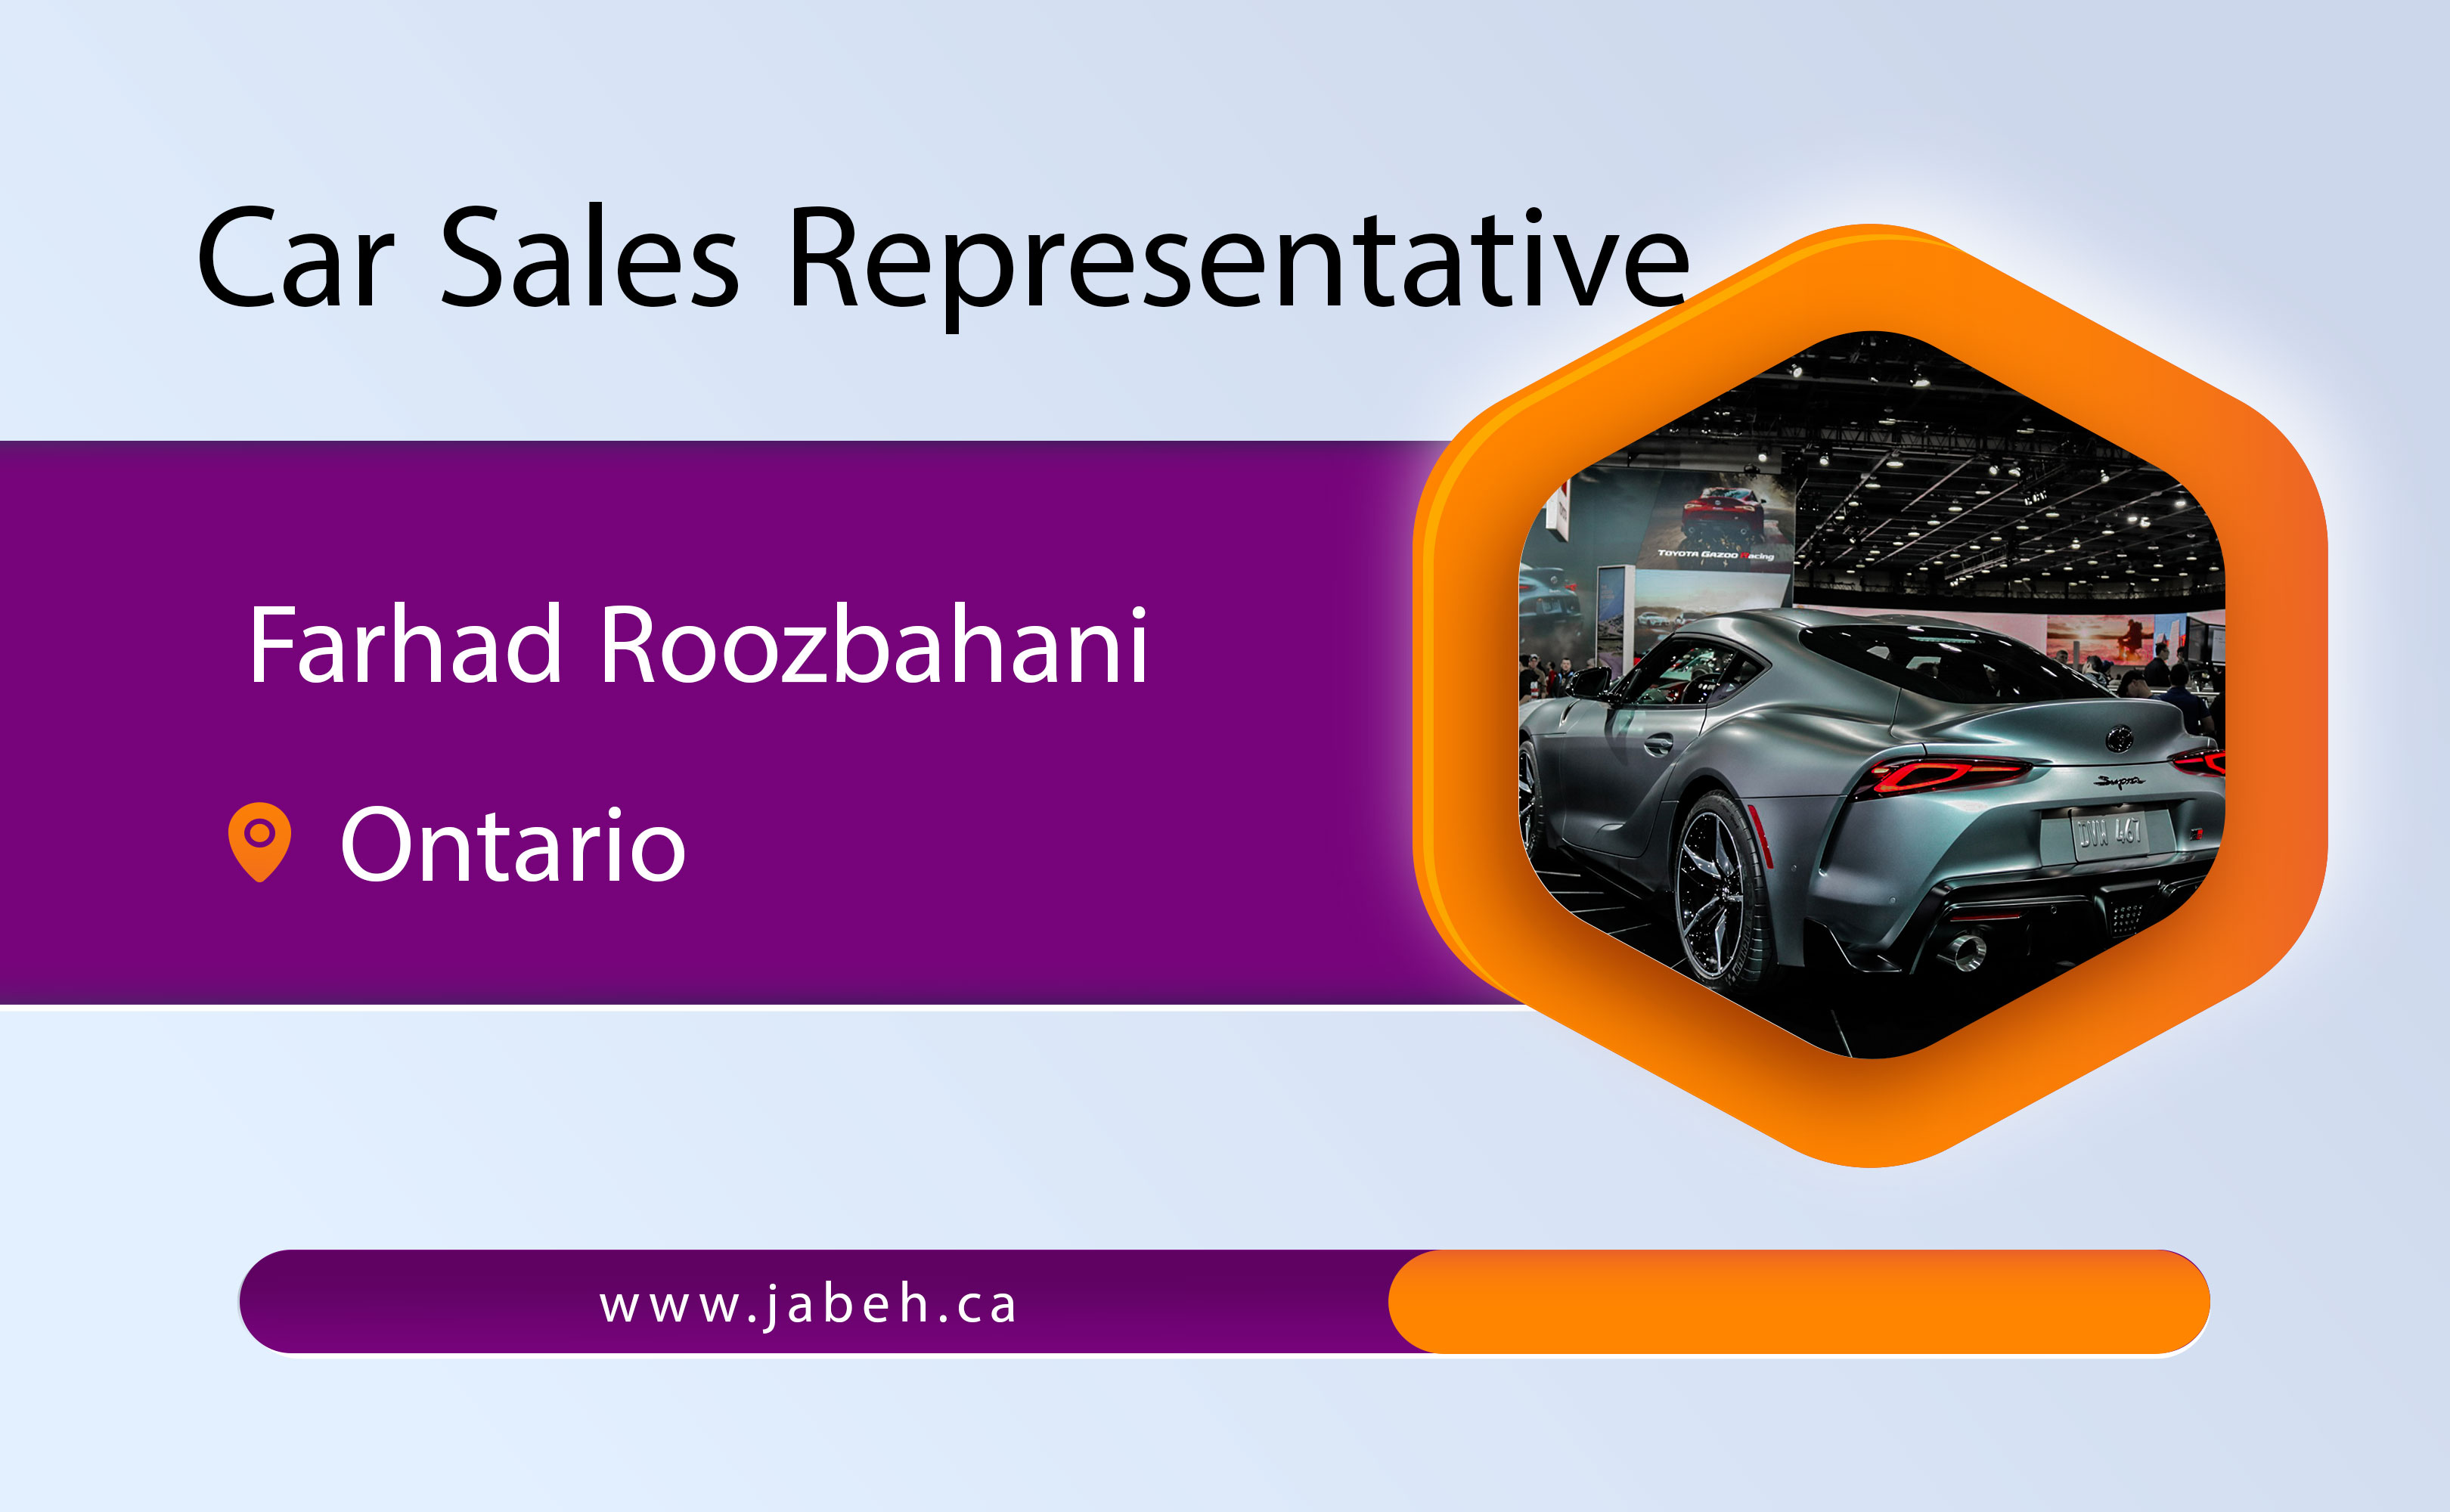 Iranian car sales representative Farhad Rozbahani in Ontario